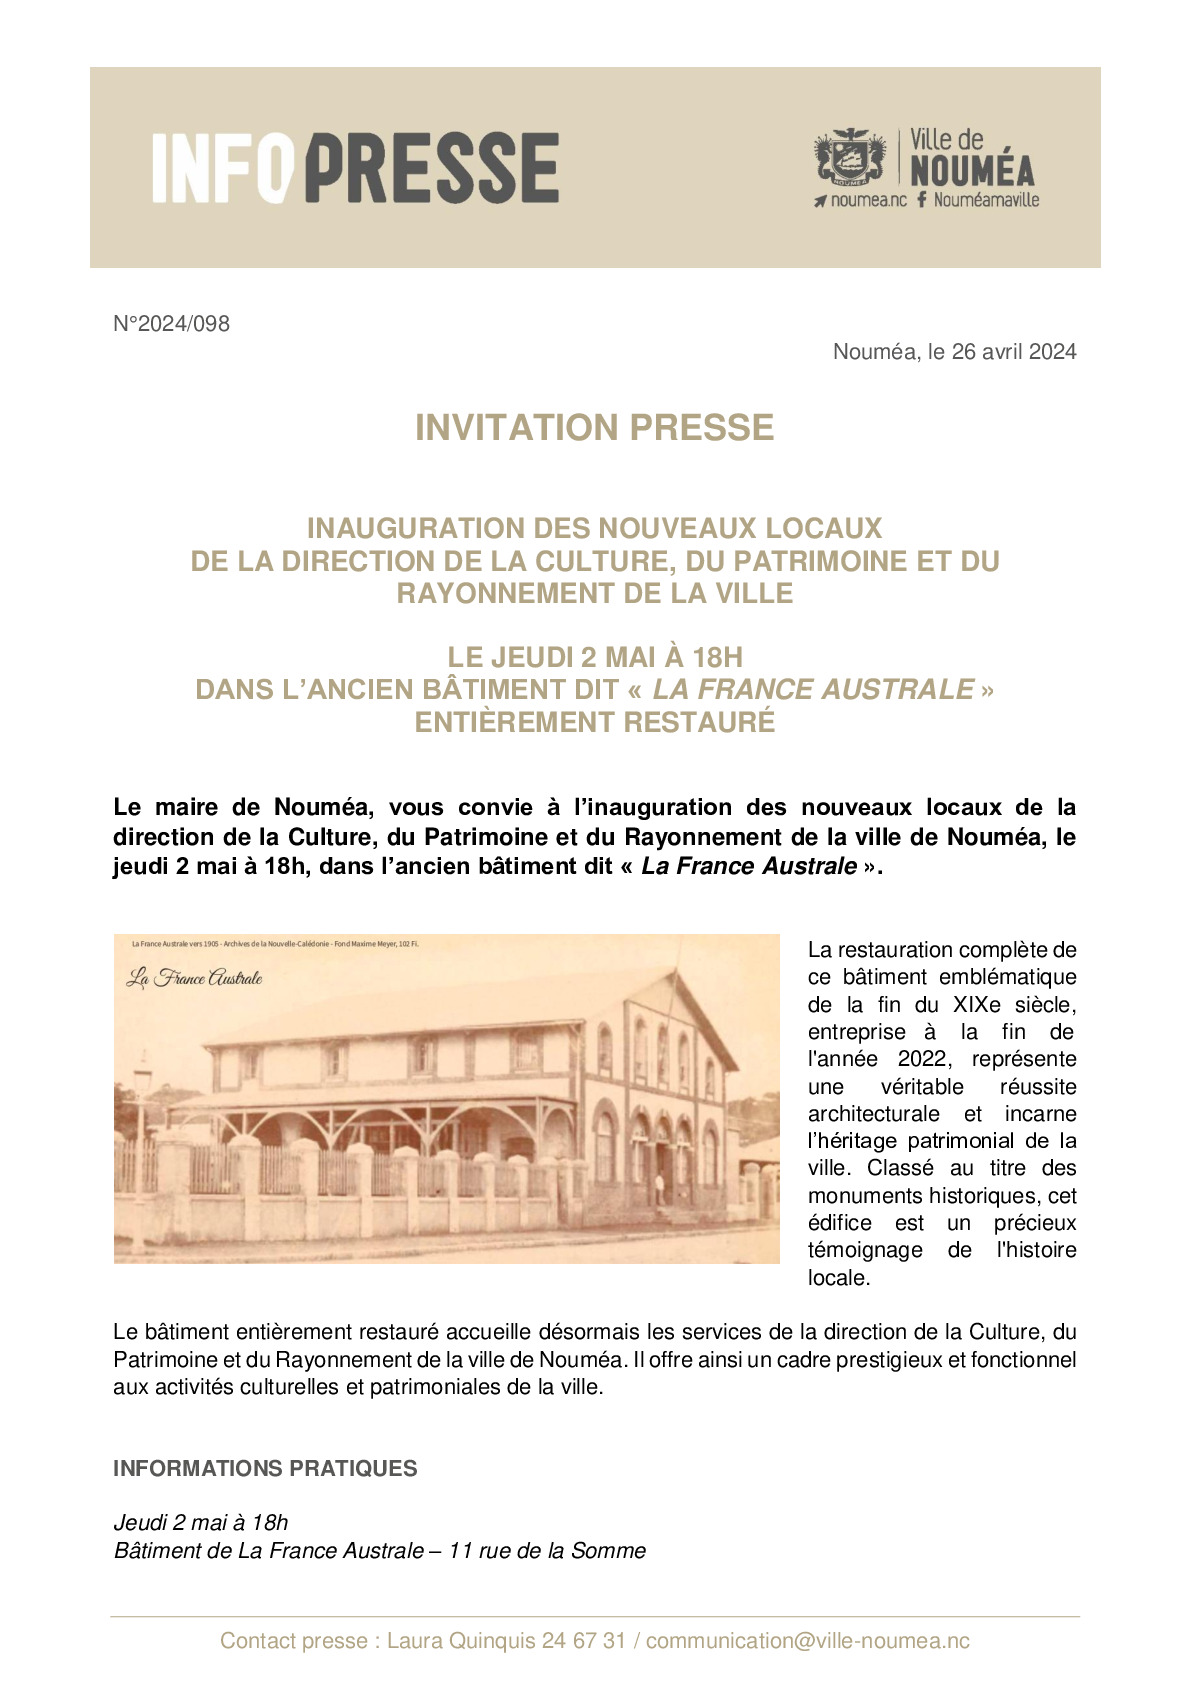 098 IVP Invitation presse inauguration France Australe.pdf